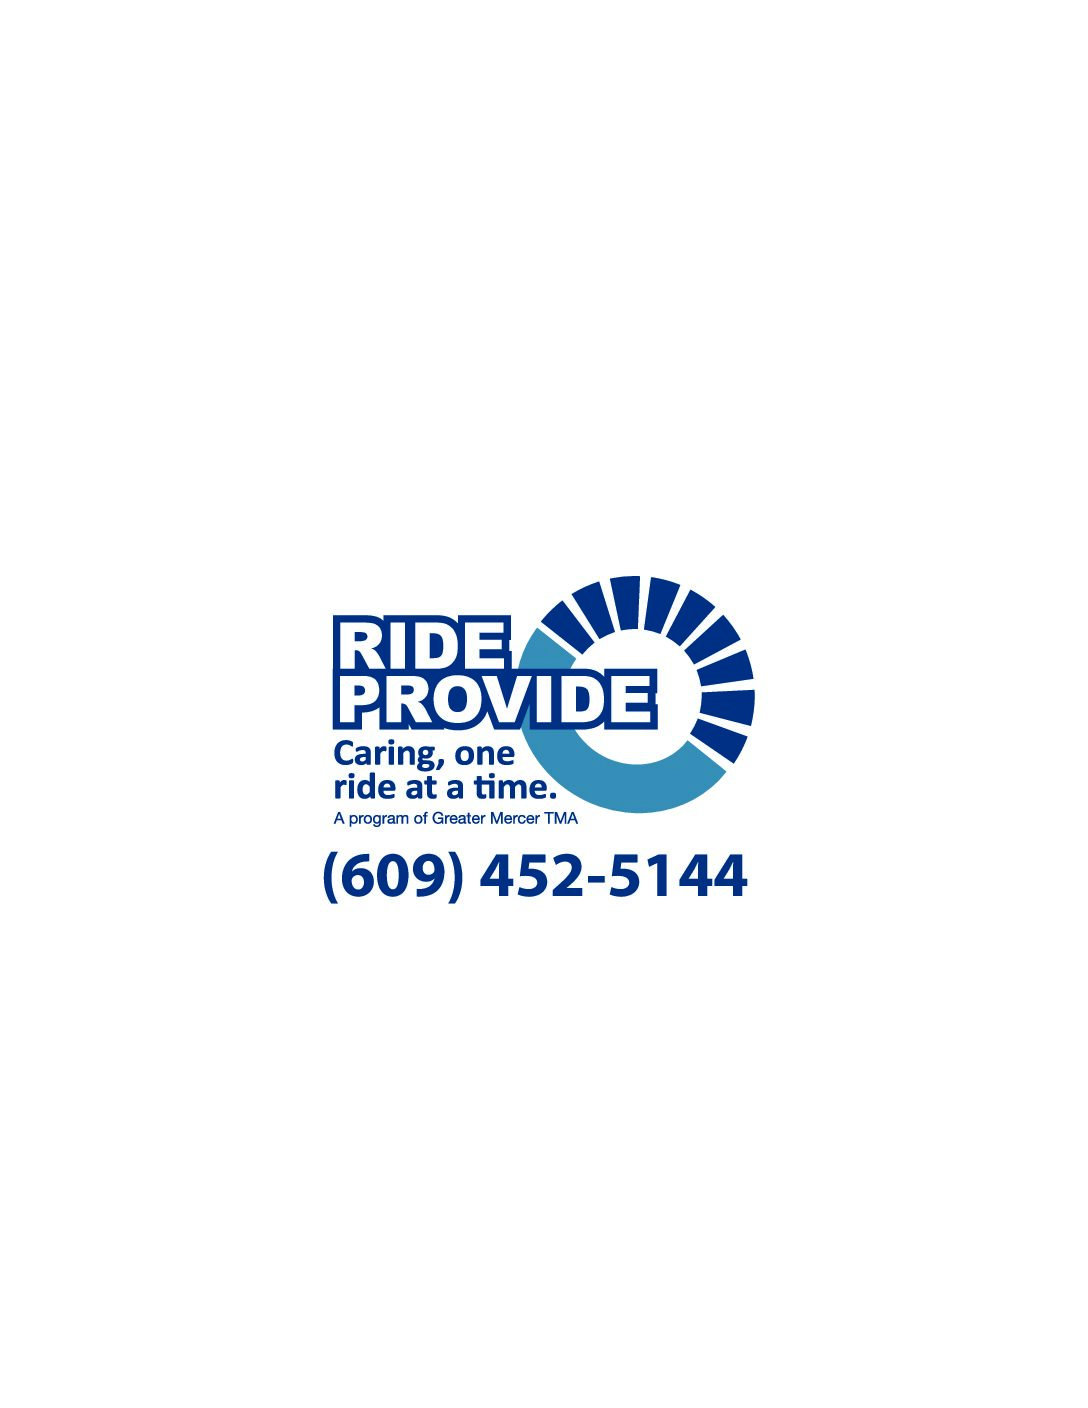 rideprovide-logo-march-15th